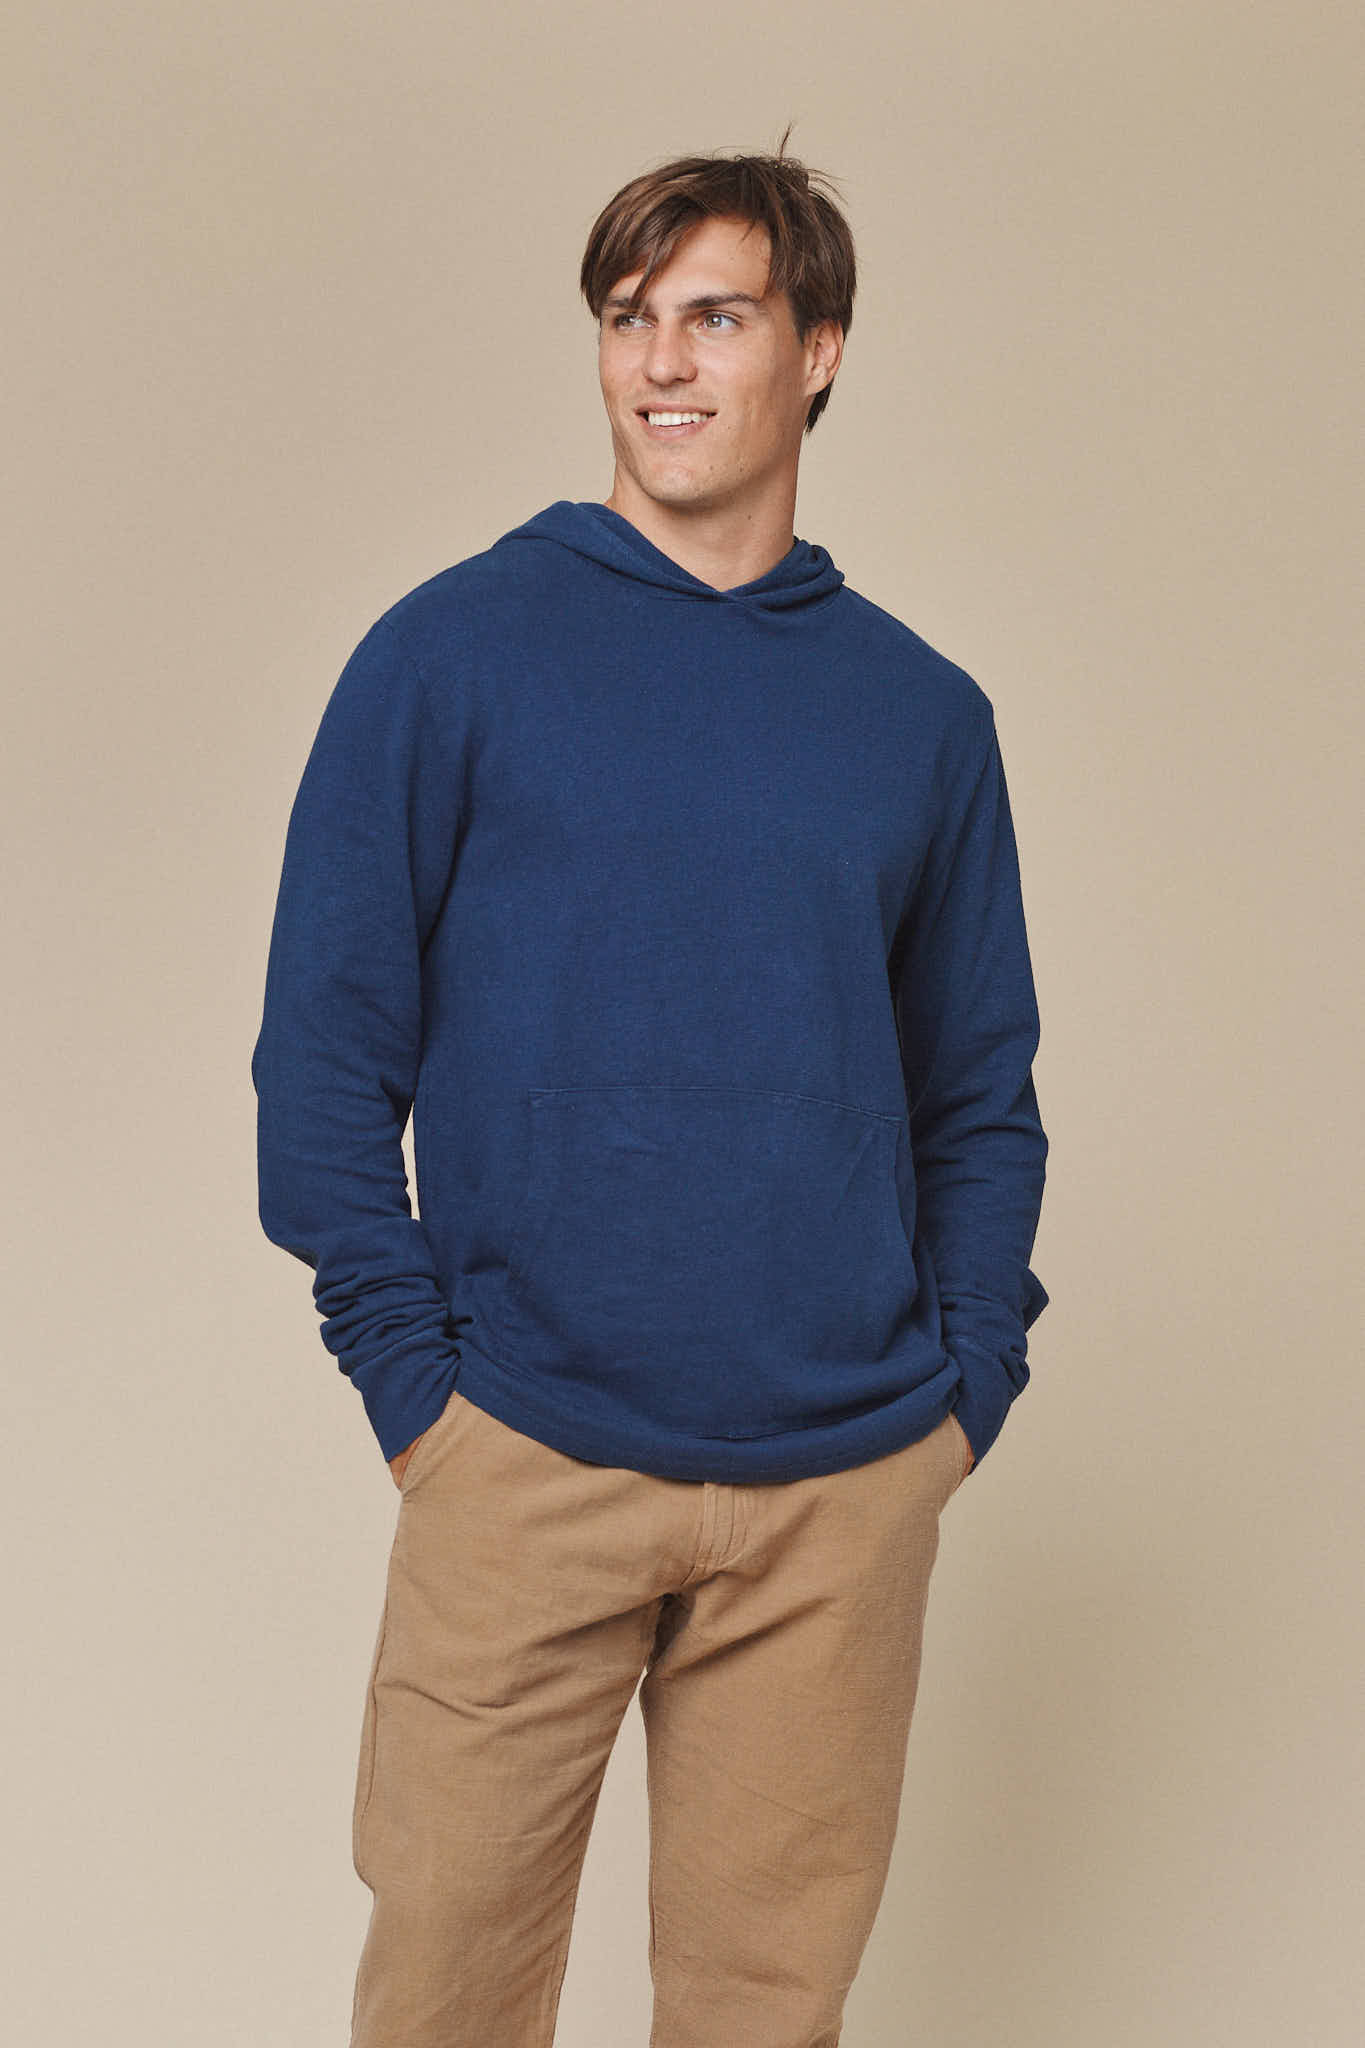 Santa Cruz Hooded Long Sleeve | Jungmaven Hemp Clothing & Accessories / model_desc: Travis is 6’1” wearing L